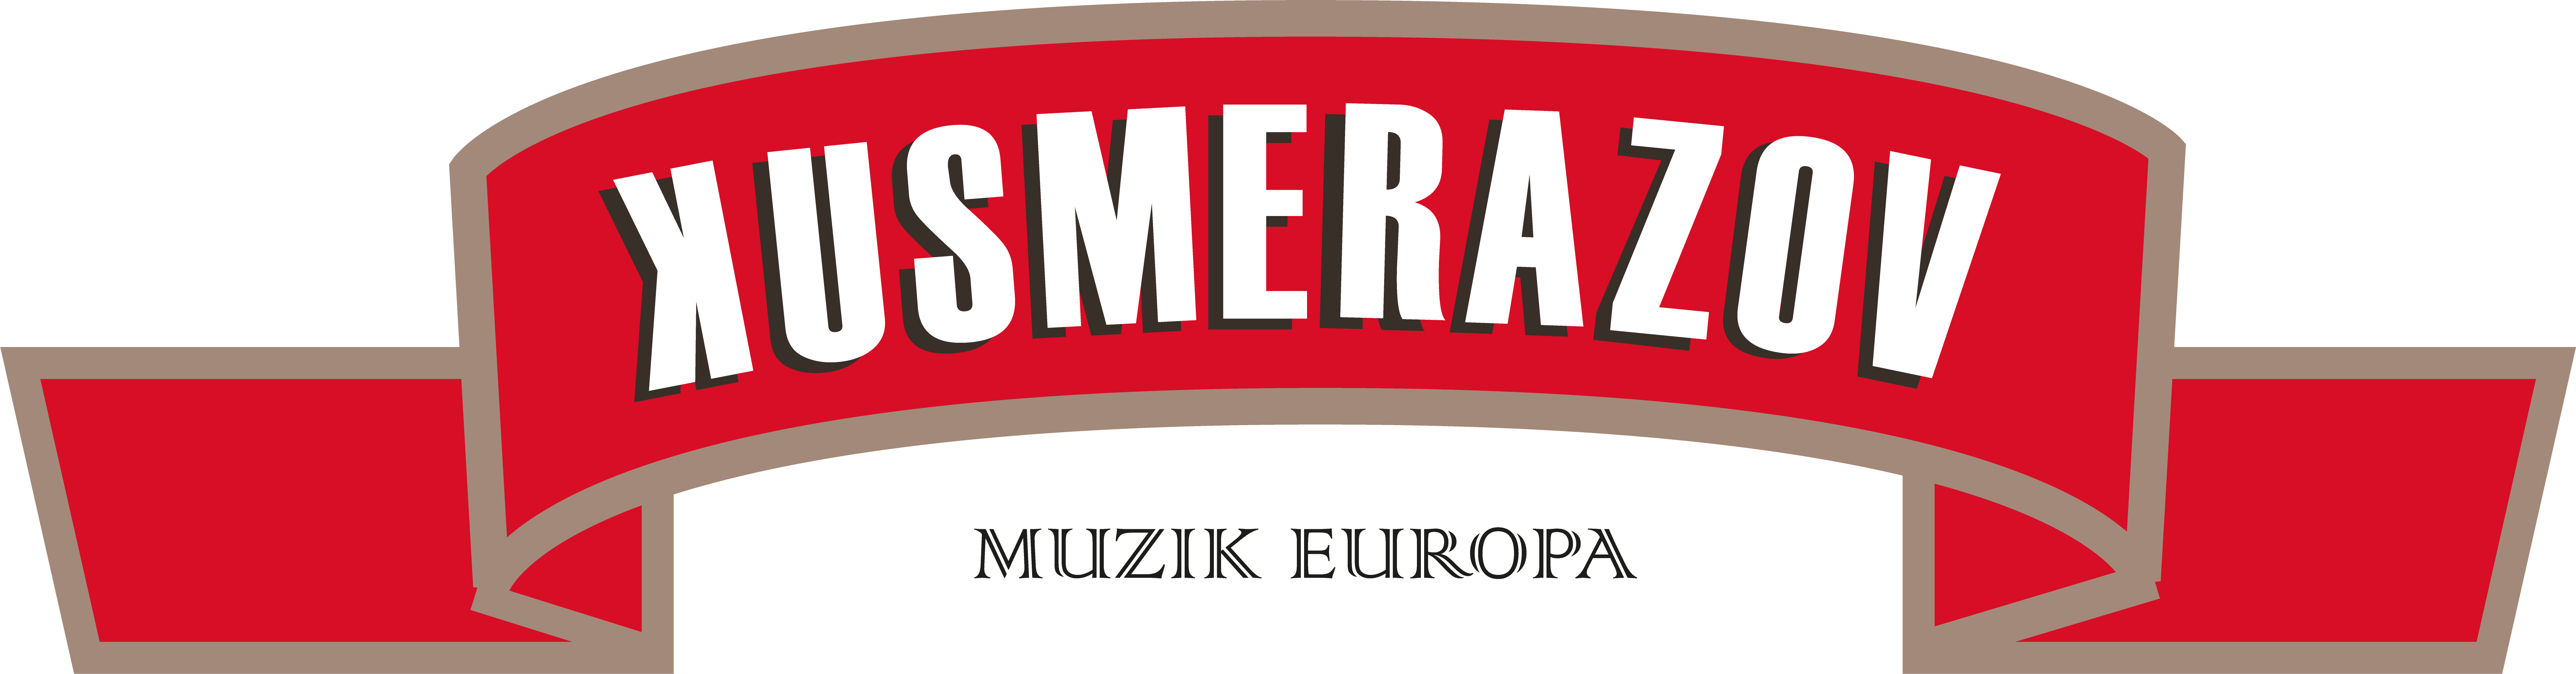 Logo du groupe des Frères Kusmerazov